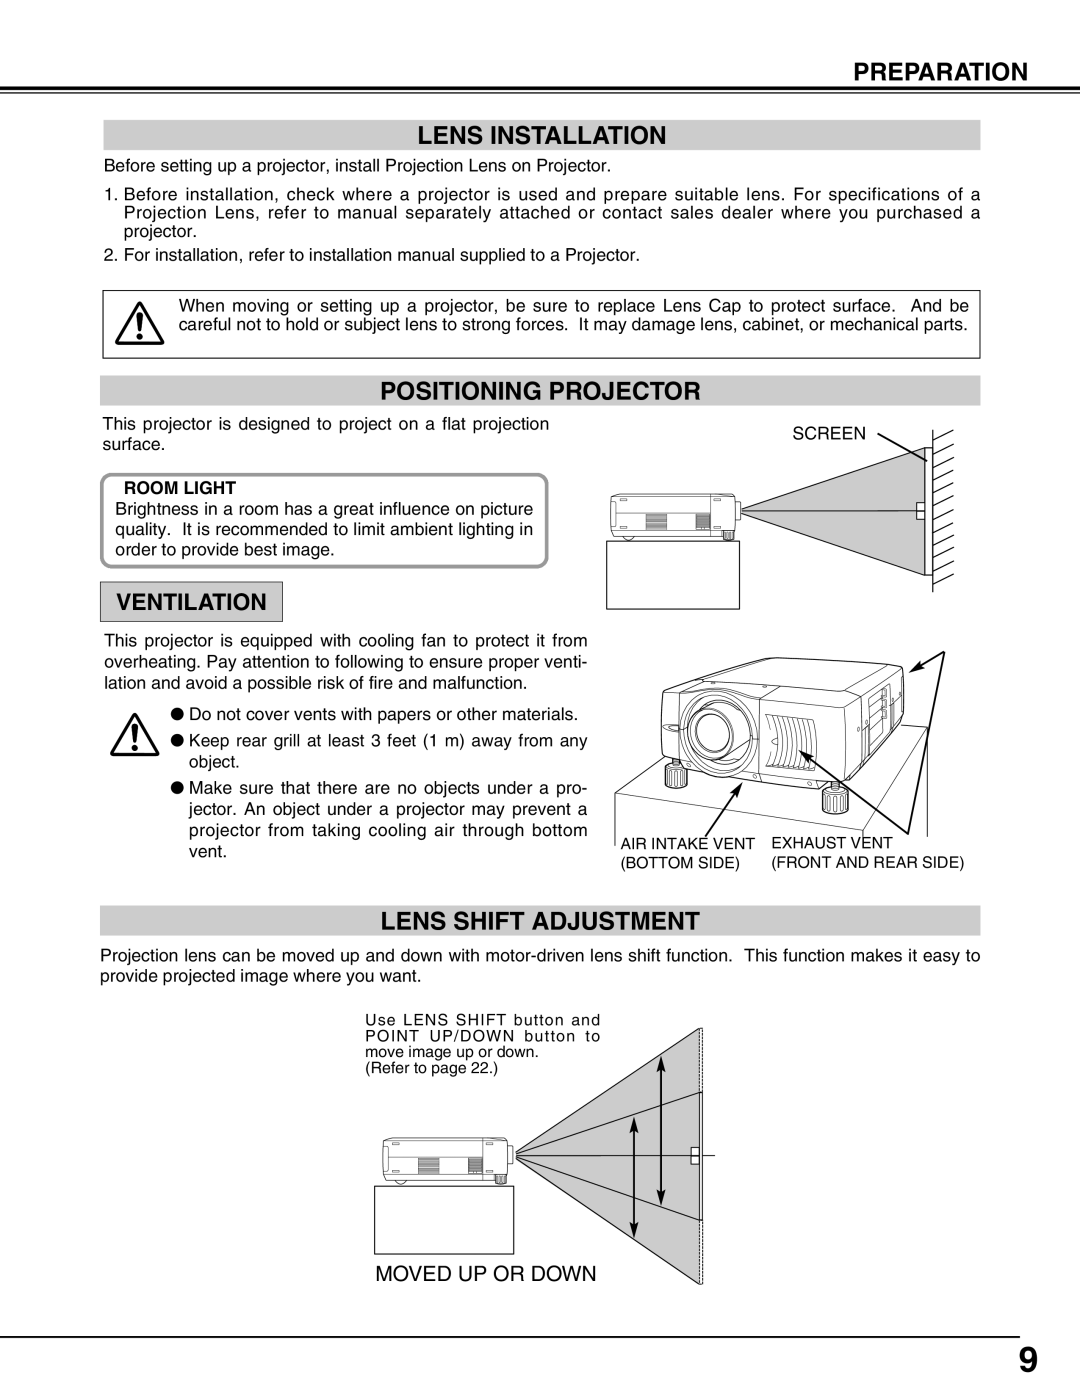 Eiki LC-SX4LA Preparation Lens Installation, Positioning Projector, Lens Shift Adjustment, Ventilation, Moved Up Or Down 